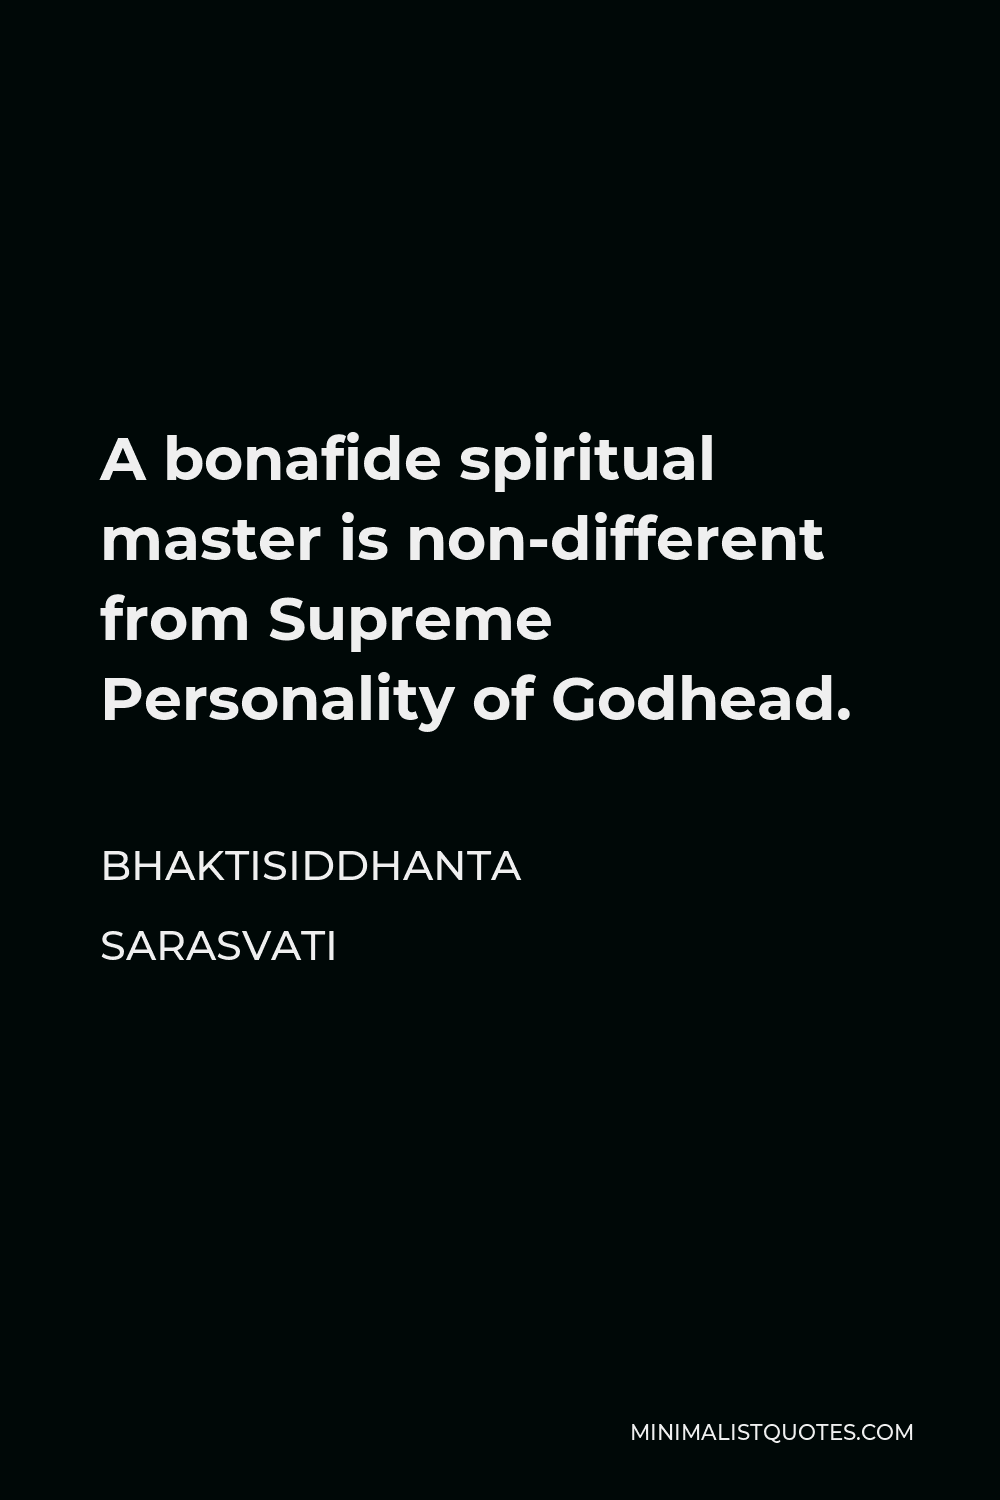 Bhaktisiddhanta Sarasvati Quote - A bonafide spiritual master is non-different from Supreme Personality of Godhead.